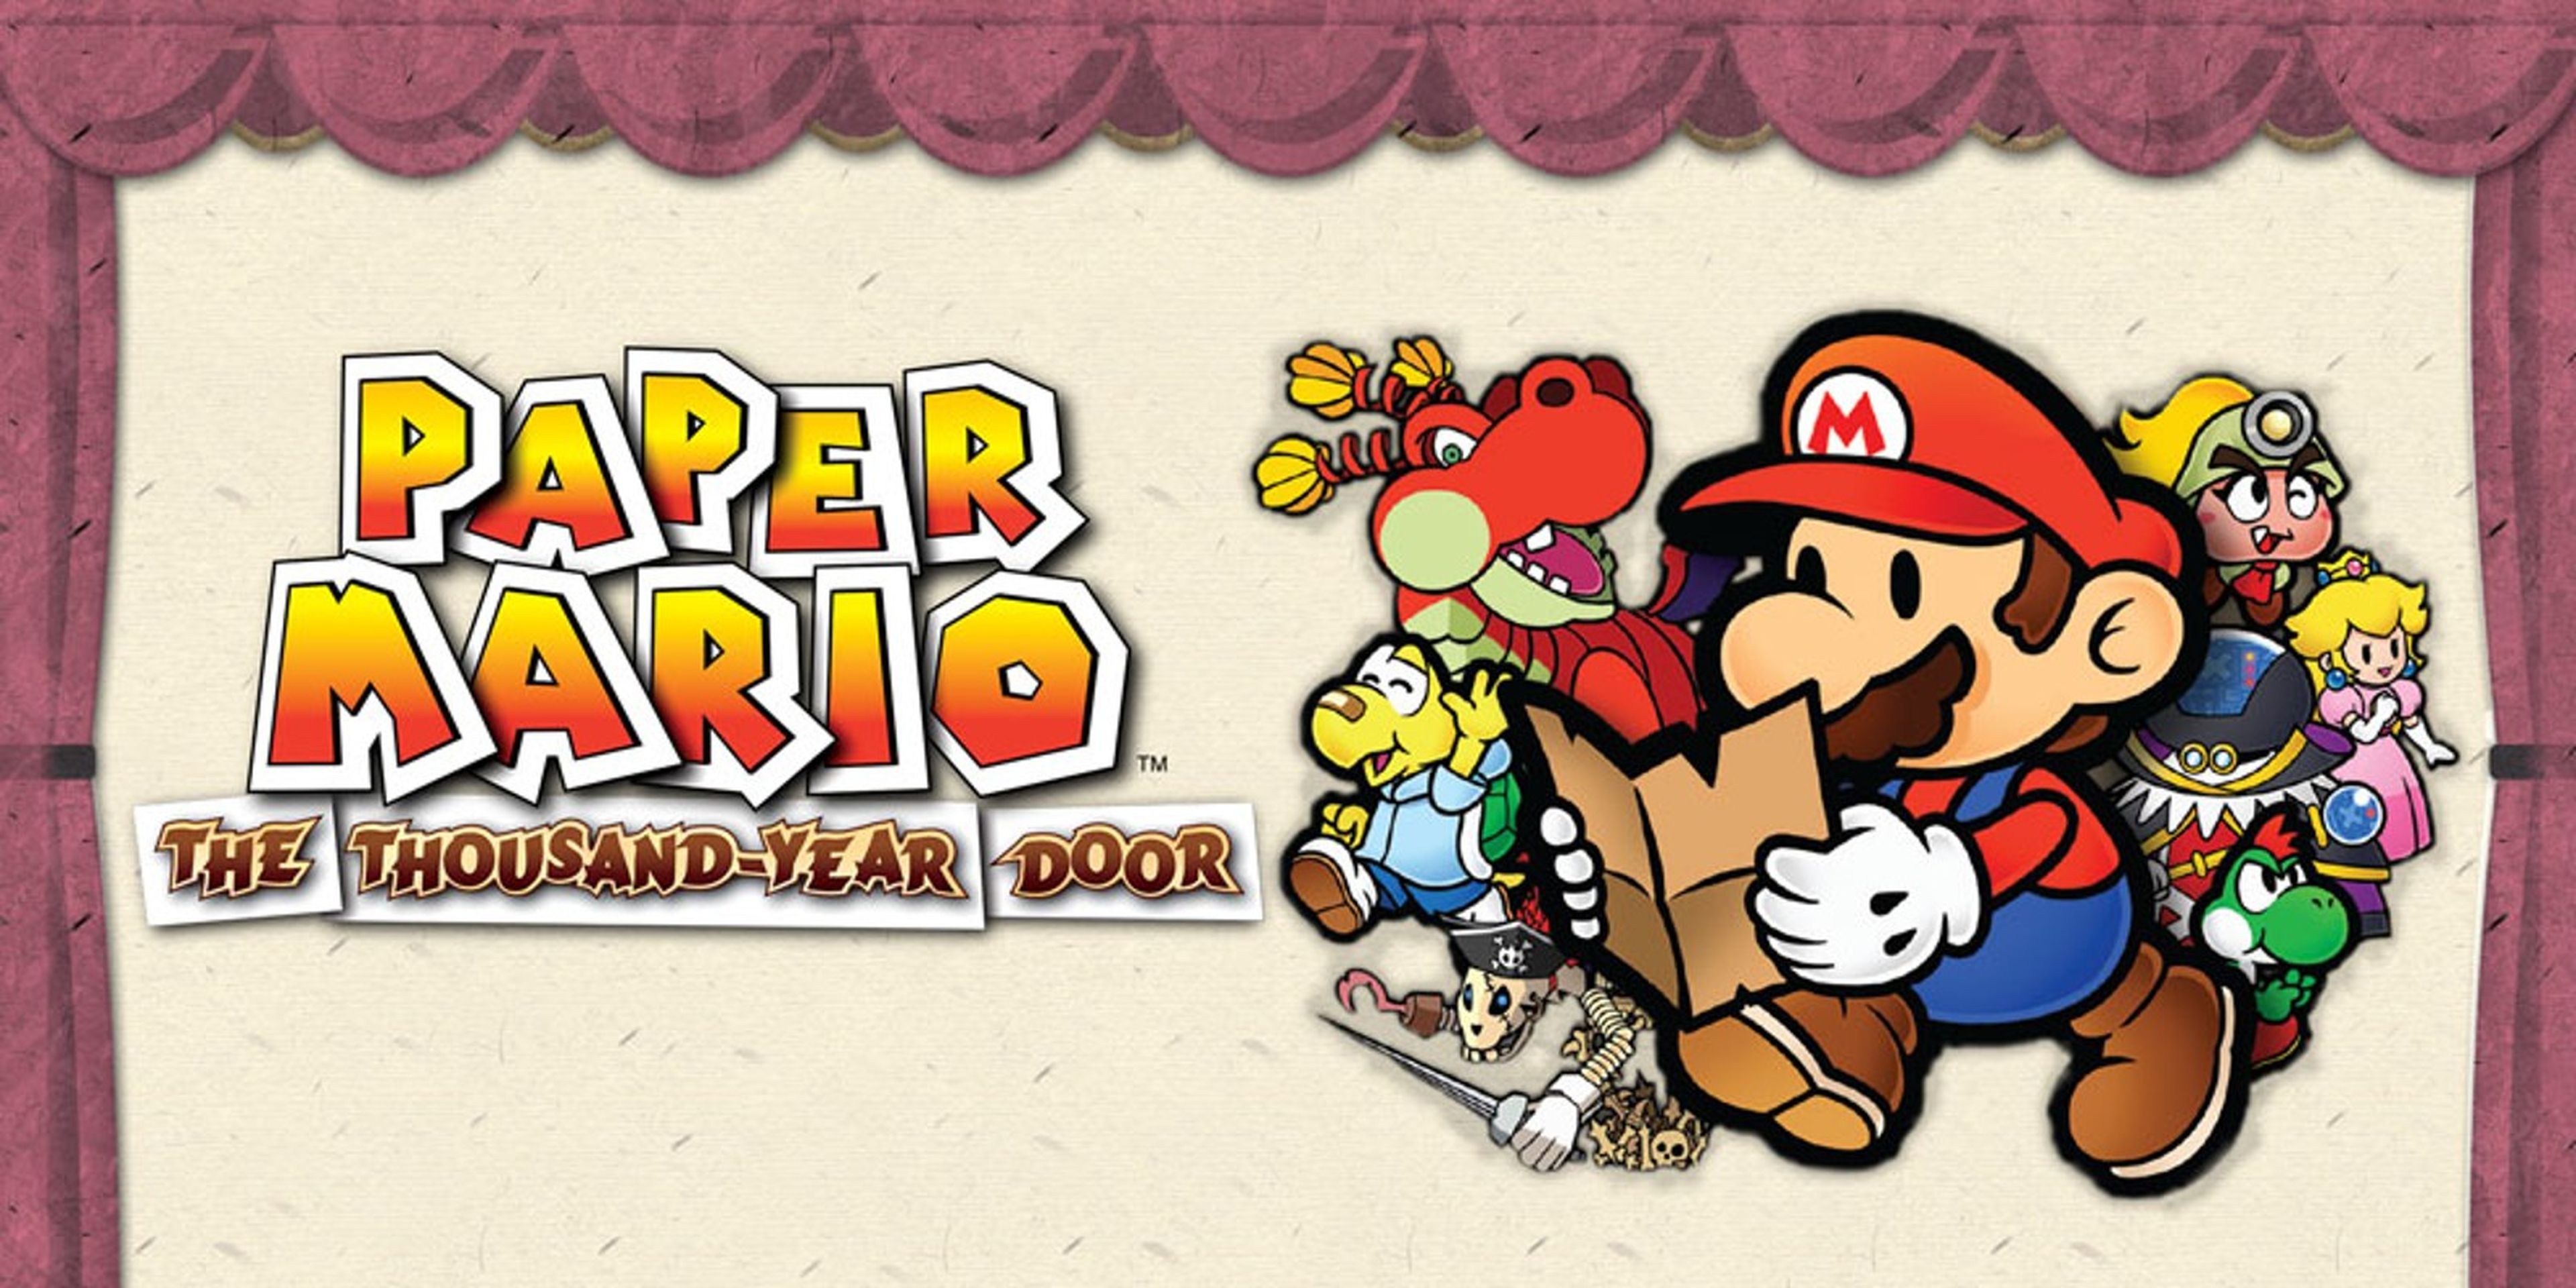 Mario the thousand year door. Paper Mario: the Thousand-year Door. Paper Mario TTYD. GAMECUBE paper Mario - the Thousand-year Door (USA) обложка. Paper Mario 3d DS.